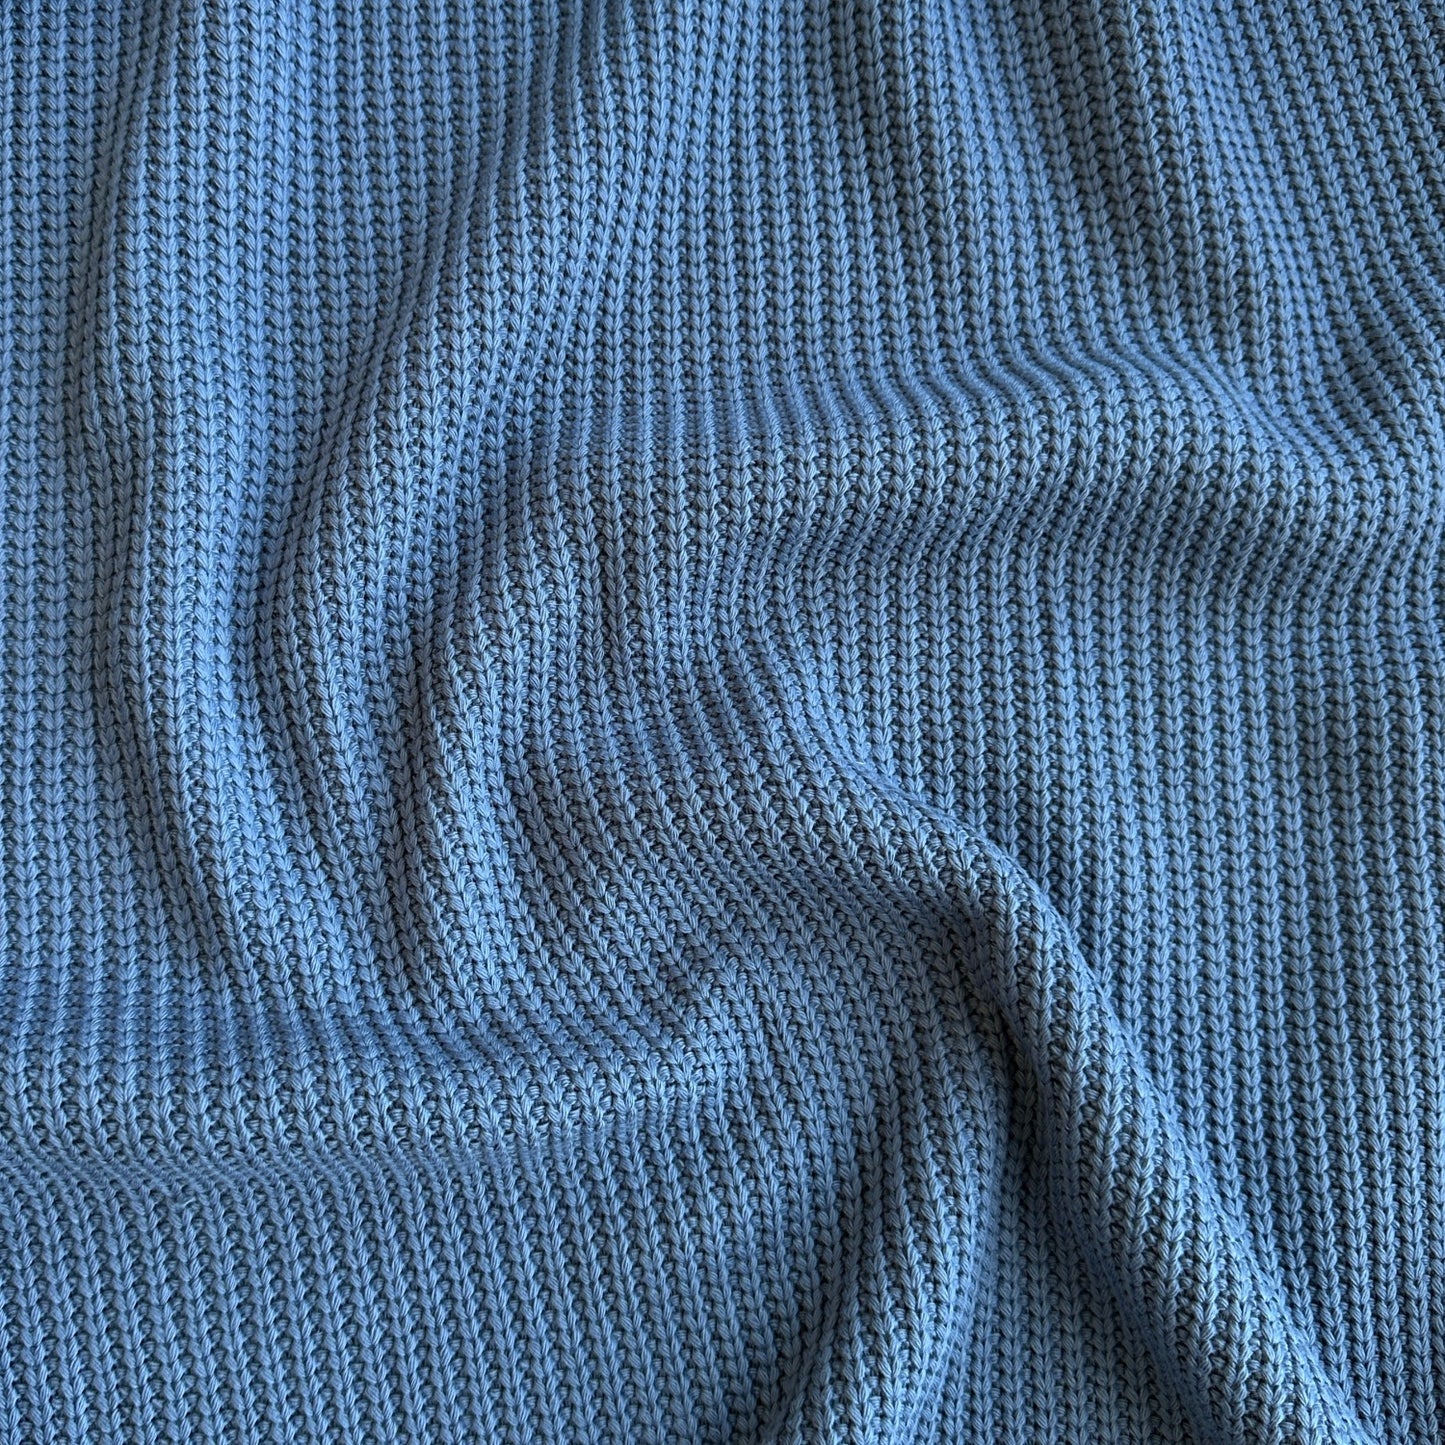 Chunky Fisherman Style Knit Fabric in Cornflower